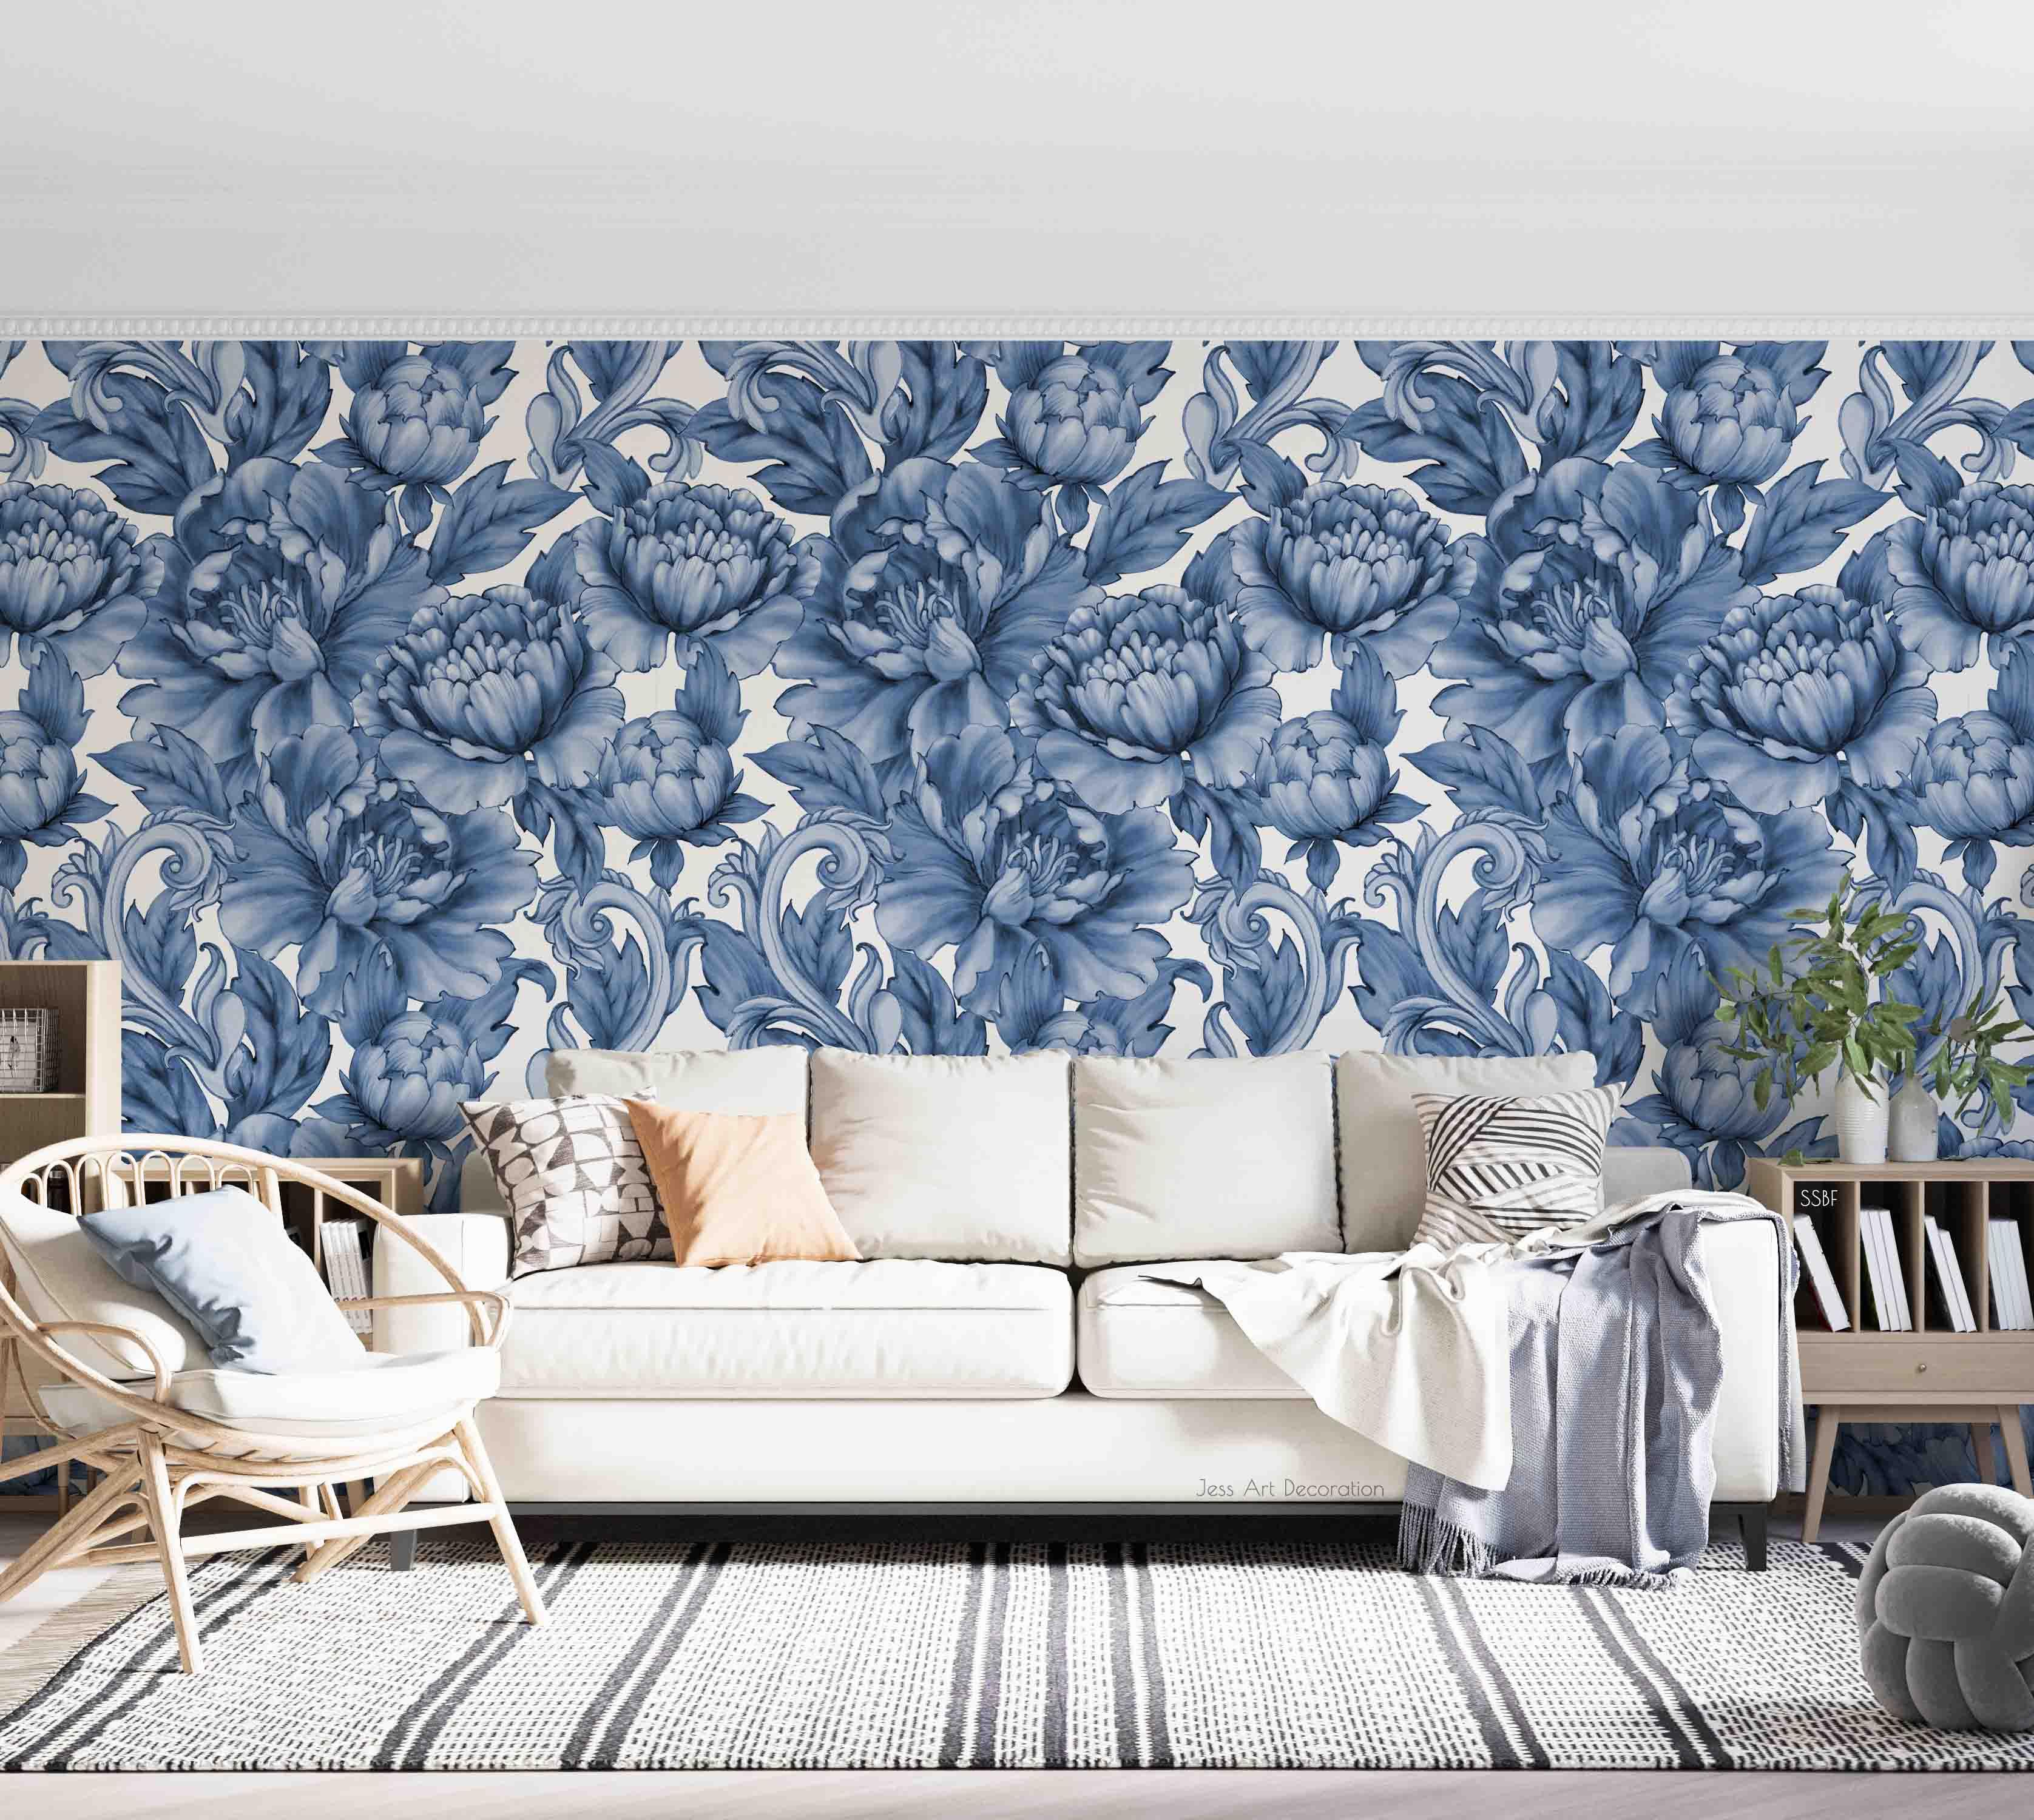 3D Vintage Baroque Art Blue Peony Flowers Background Wall Mural Wallpaper GD 3589- Jess Art Decoration